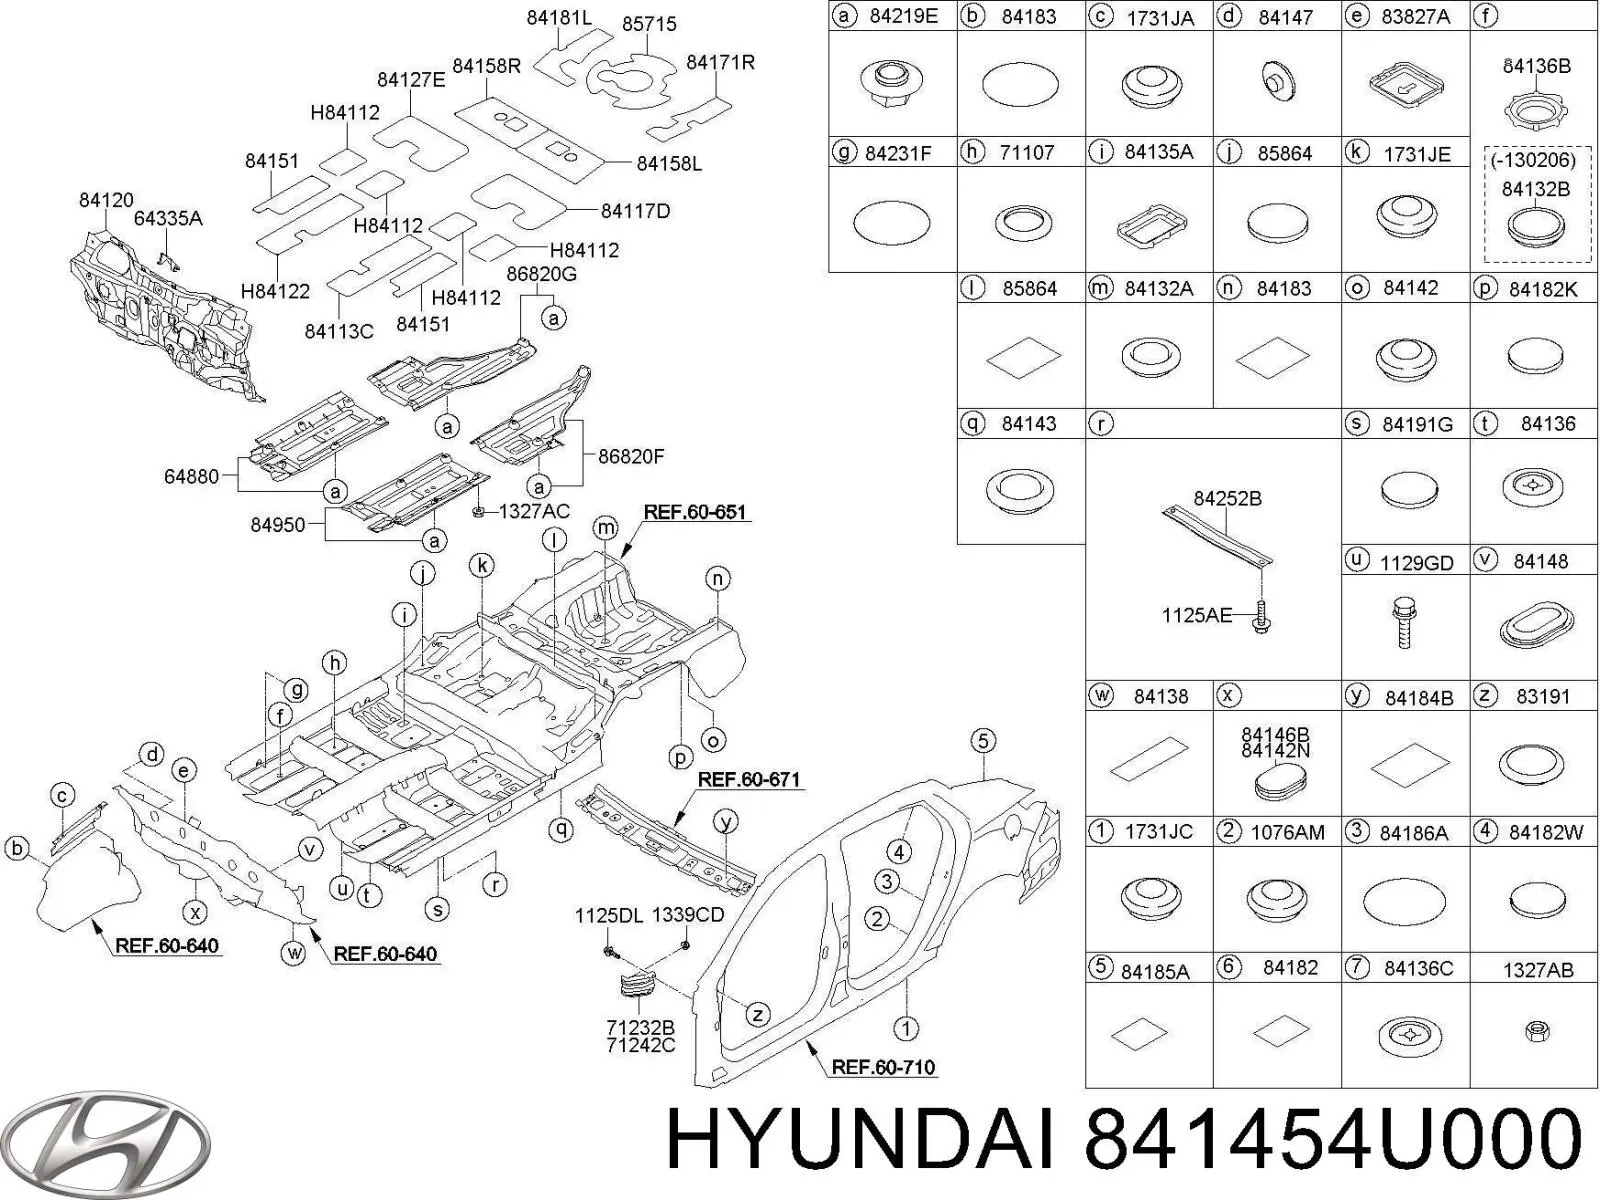 841454U000 Hyundai/Kia 